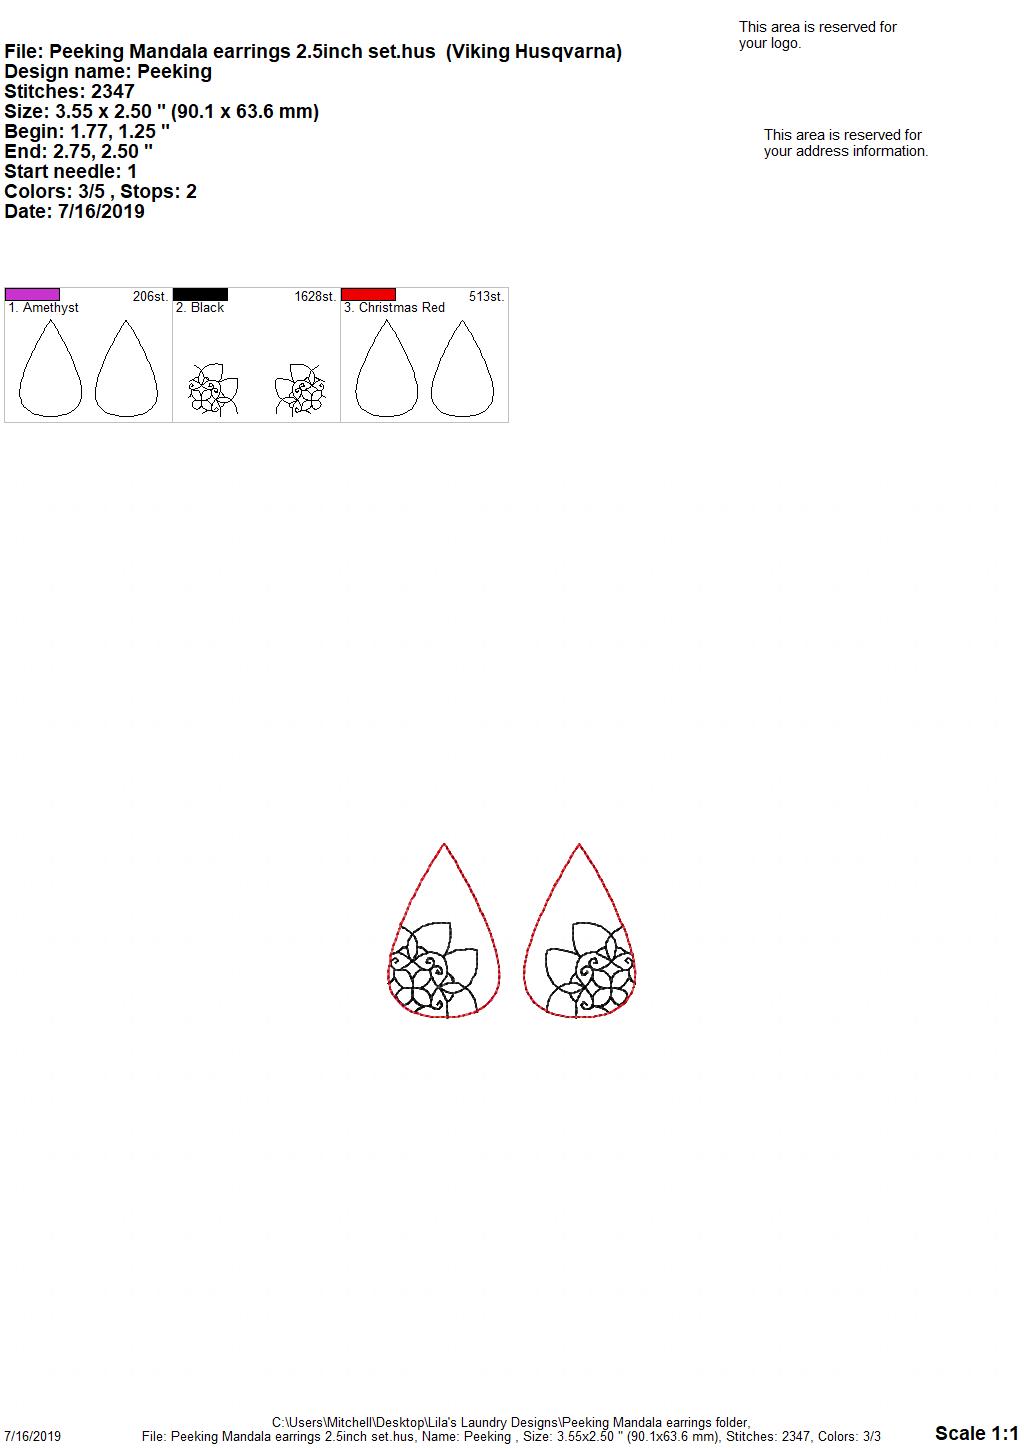 Peeking Mandala Earrings - 3 sizes - Digital Embroidery Design